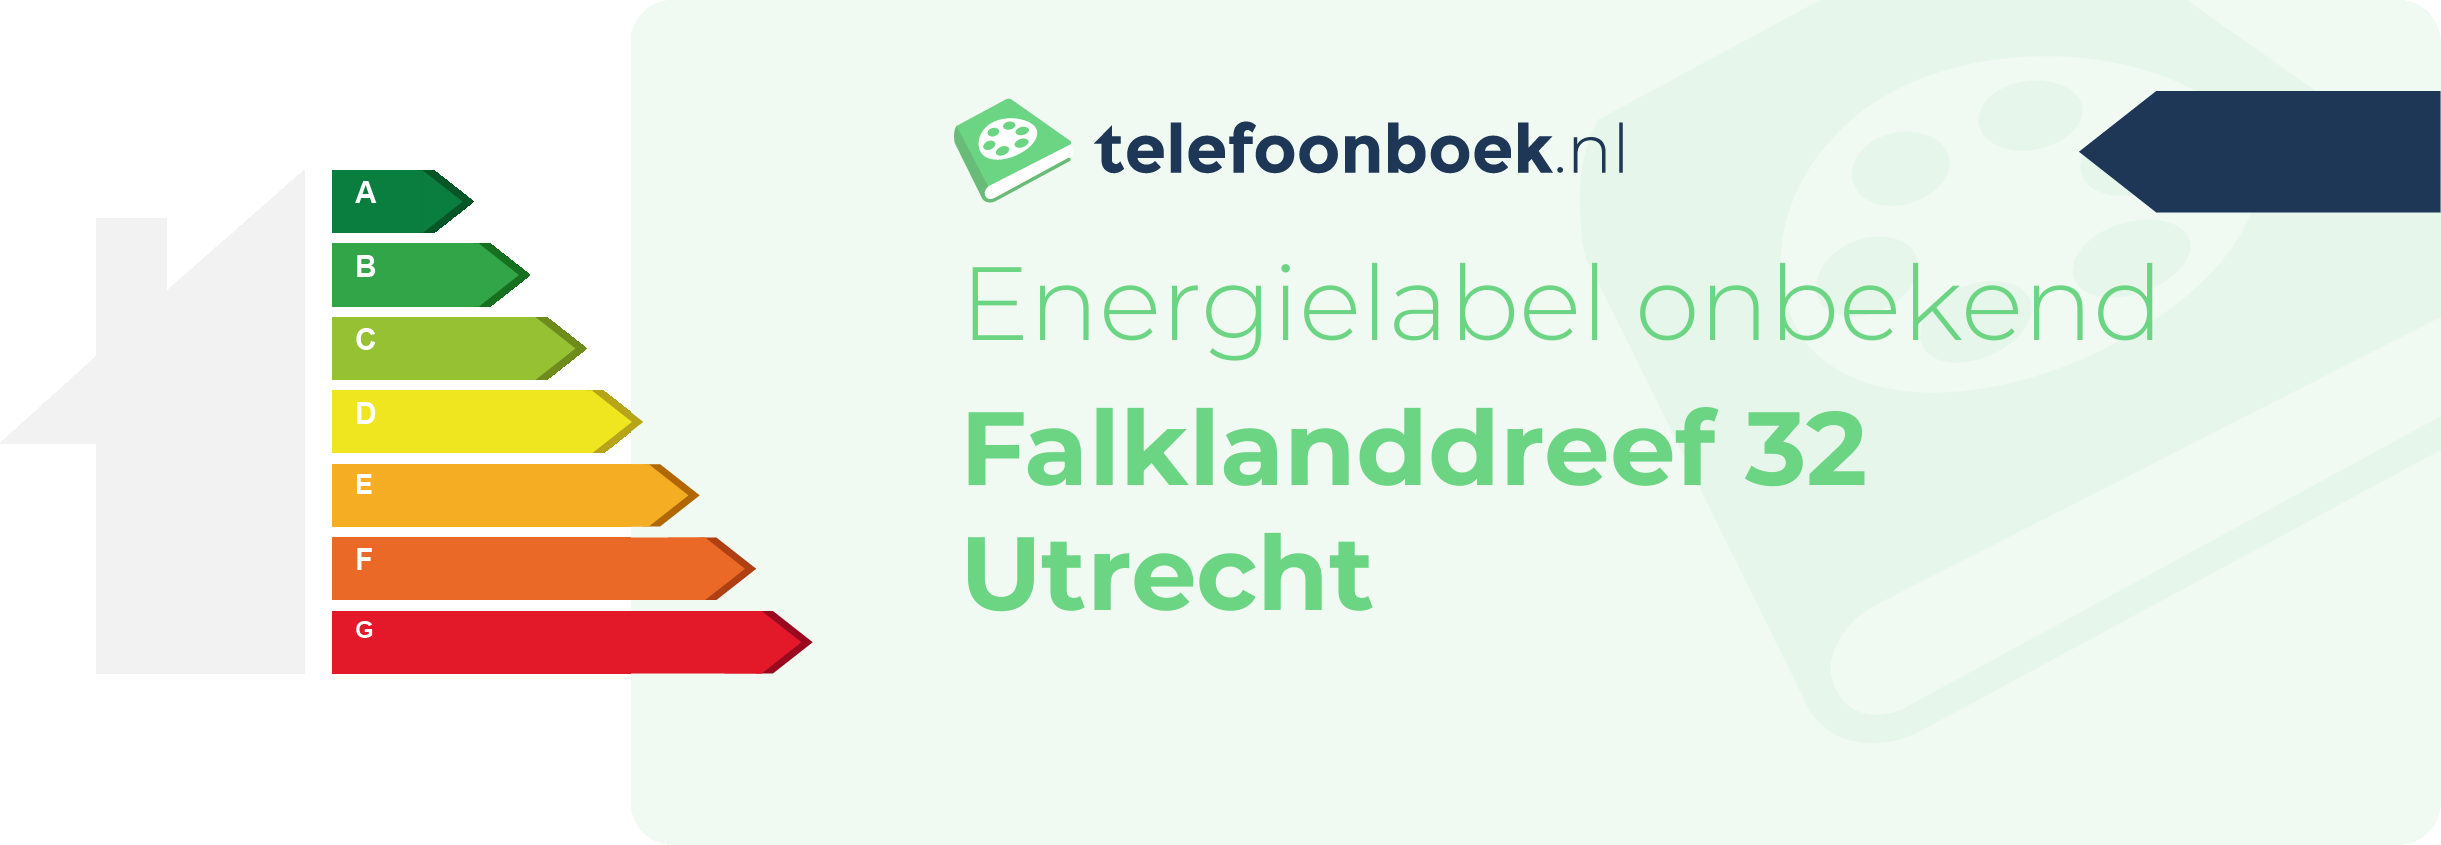 Energielabel Falklanddreef 32 Utrecht